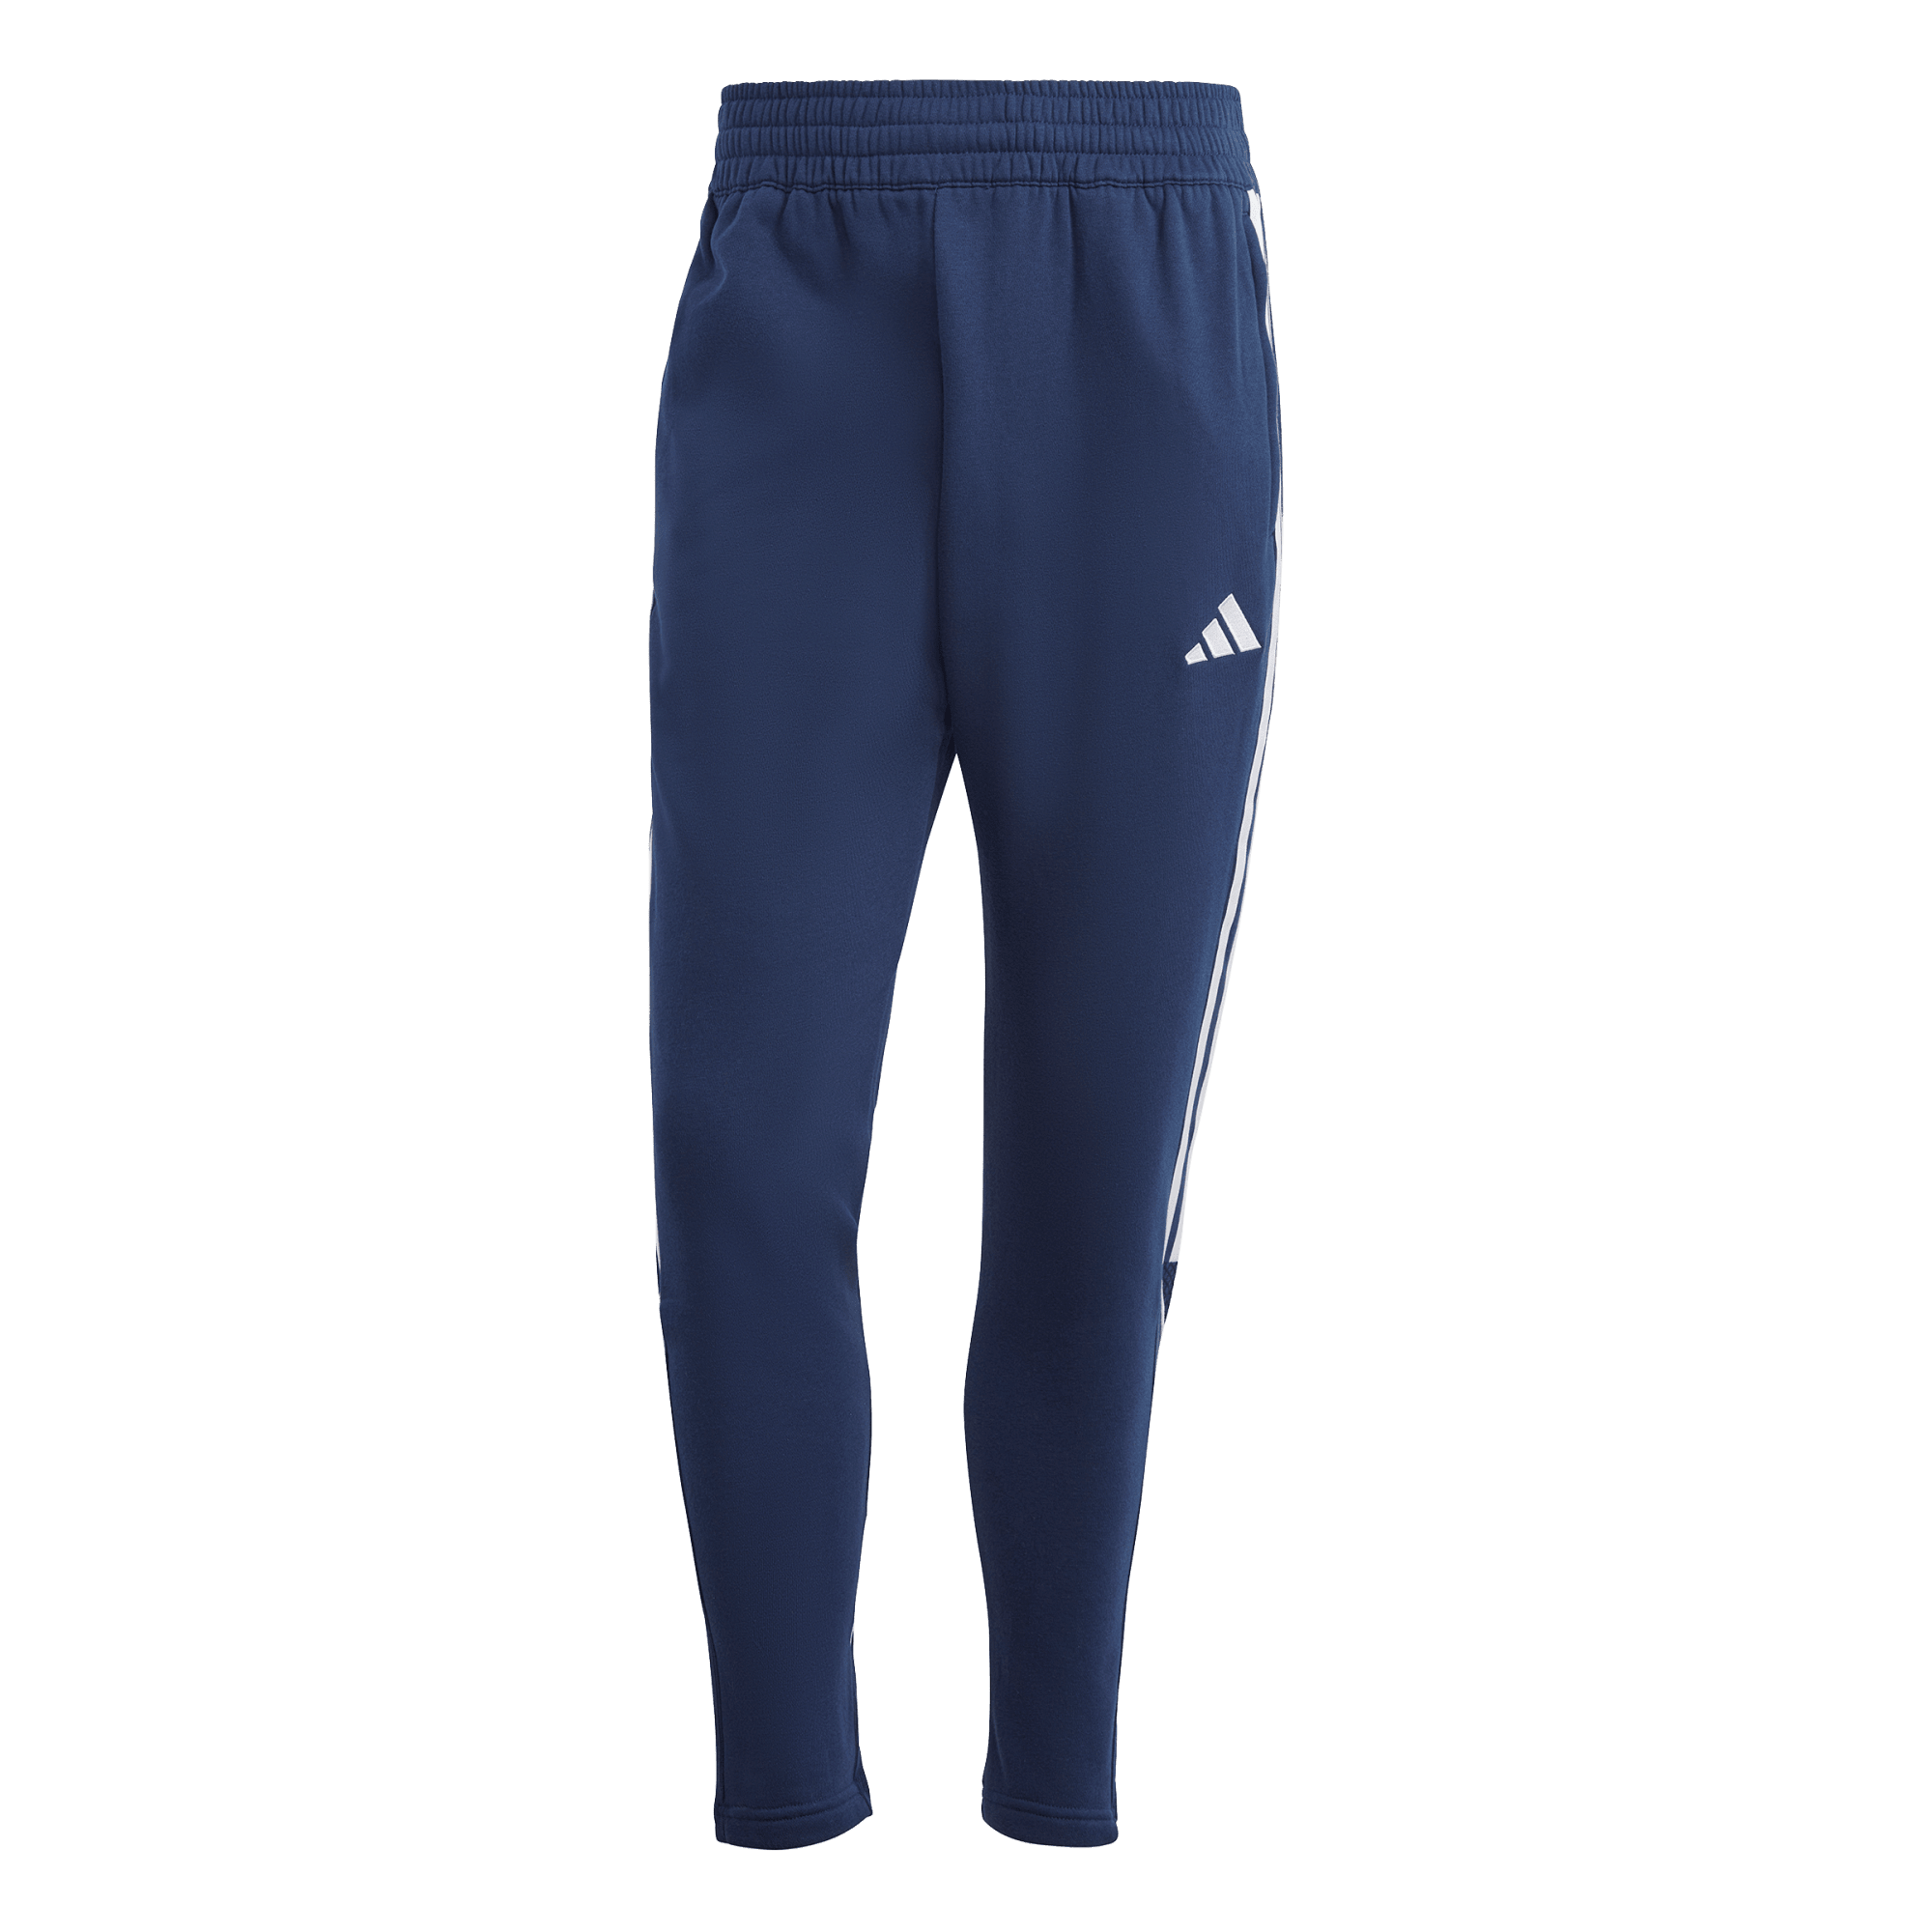 Xersion Sweatpants Men's XL Racing Blue Regular Fit NWT